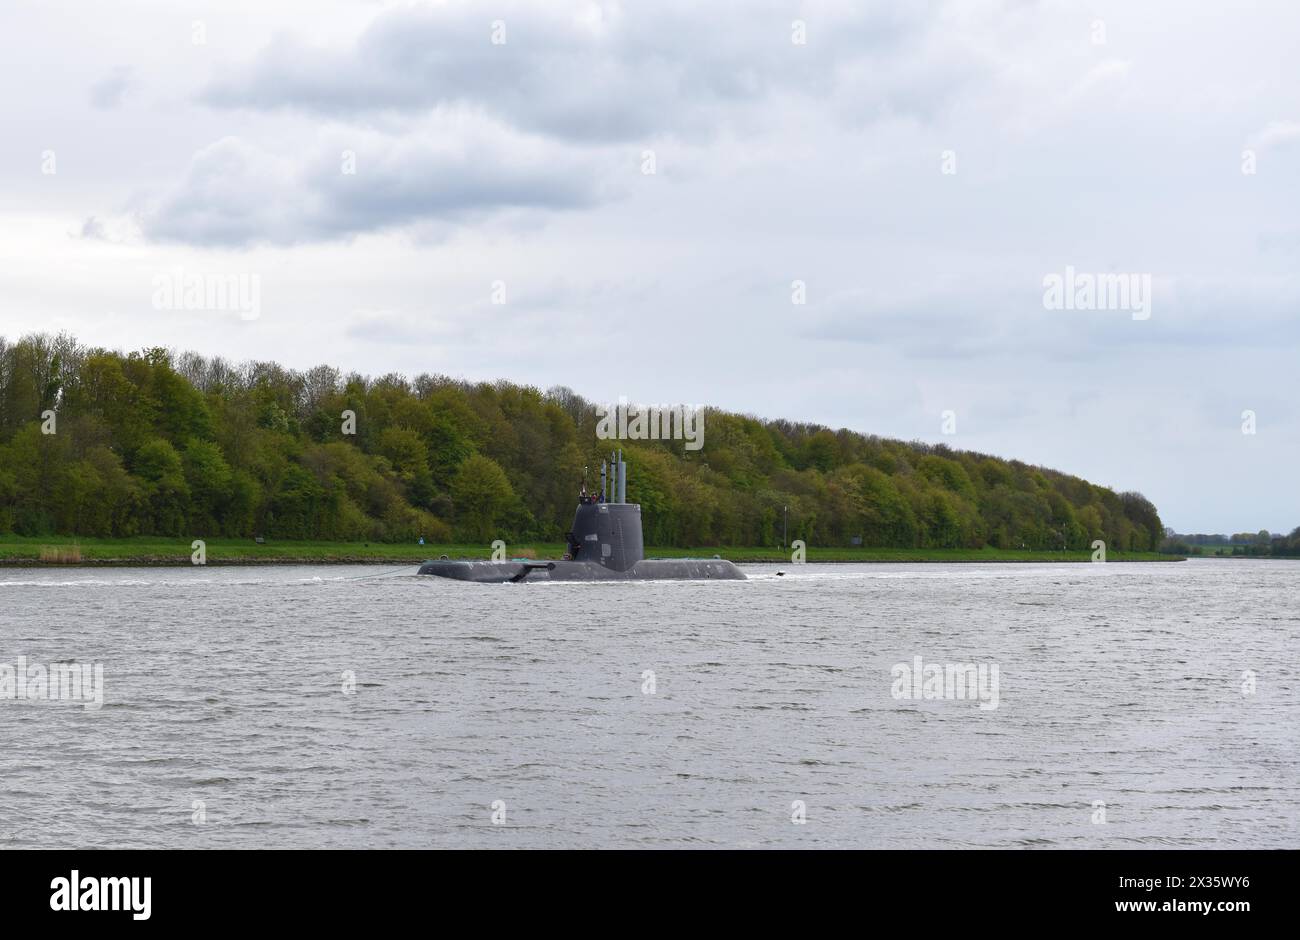 Kriegsschiff, U-Boot, U-Boot TKMS U-Boot 01 Segeln im Kieler Kanal, Kiel Kanal, Schleswig-Holstein, Deutschland Stockfoto